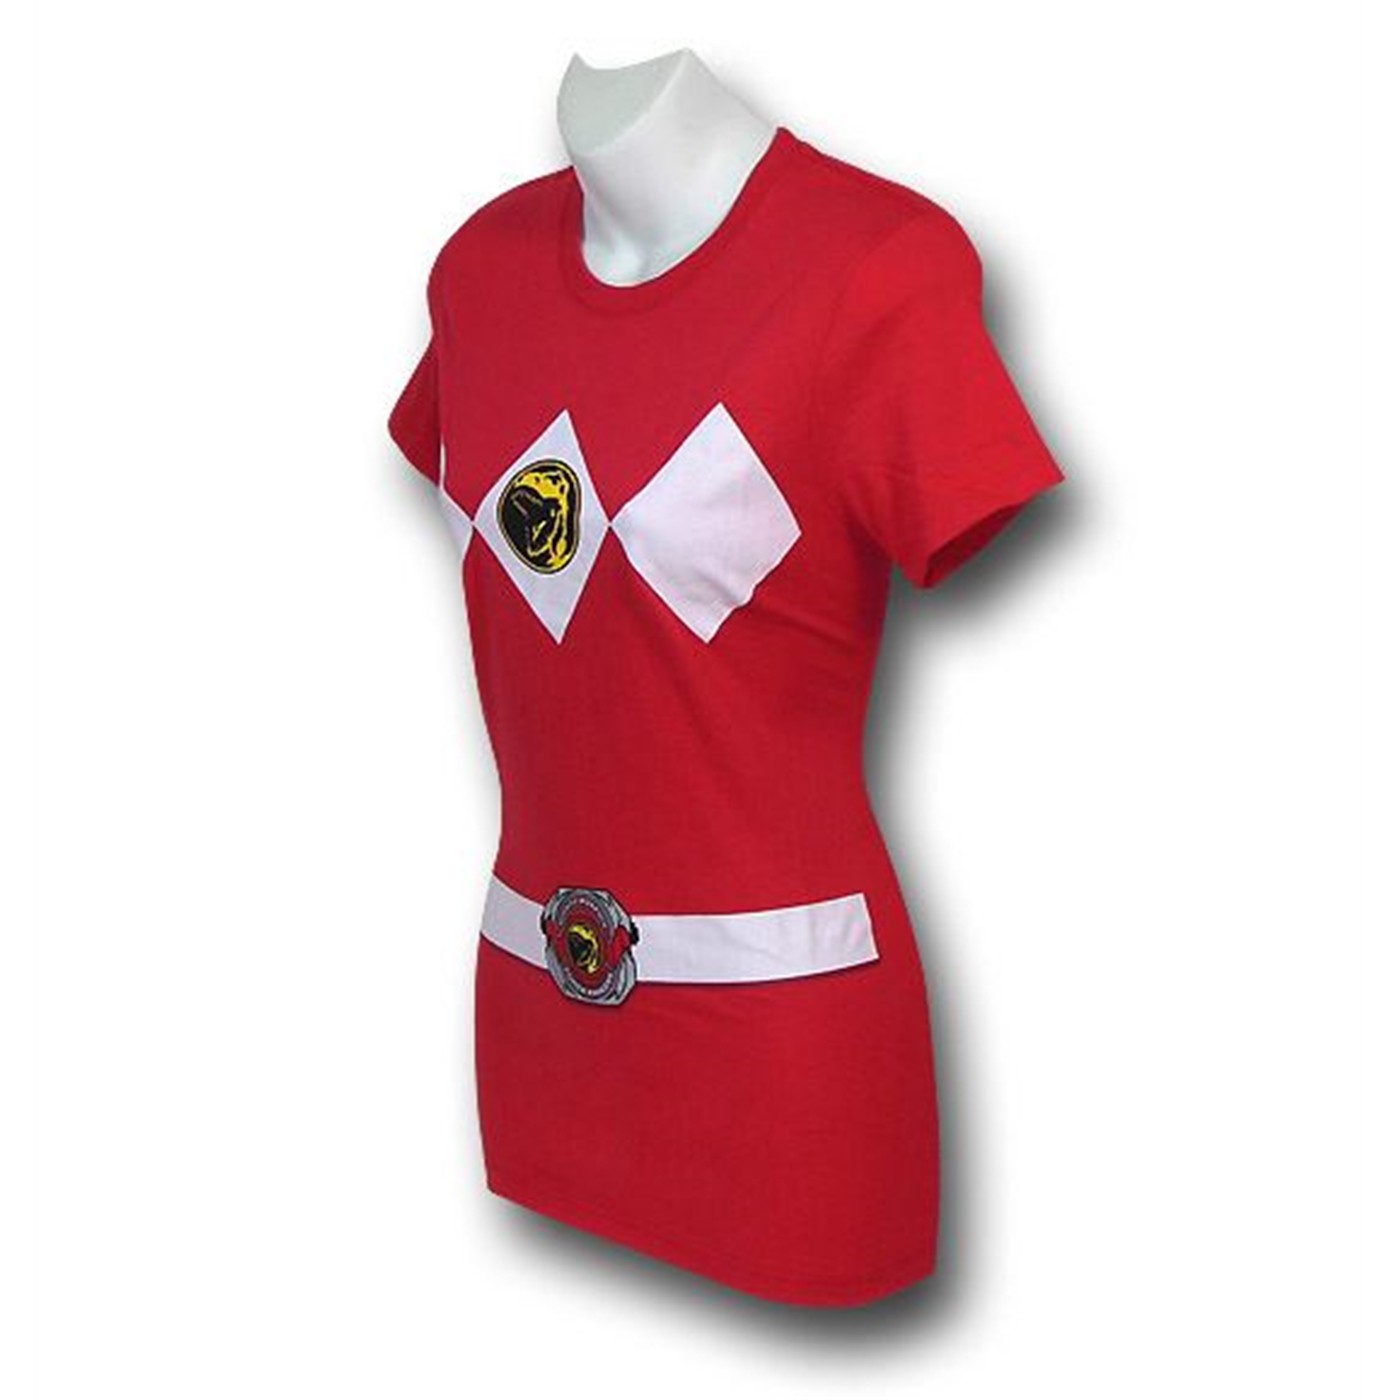 Power Rangers Red Ranger Women's T-Shirt